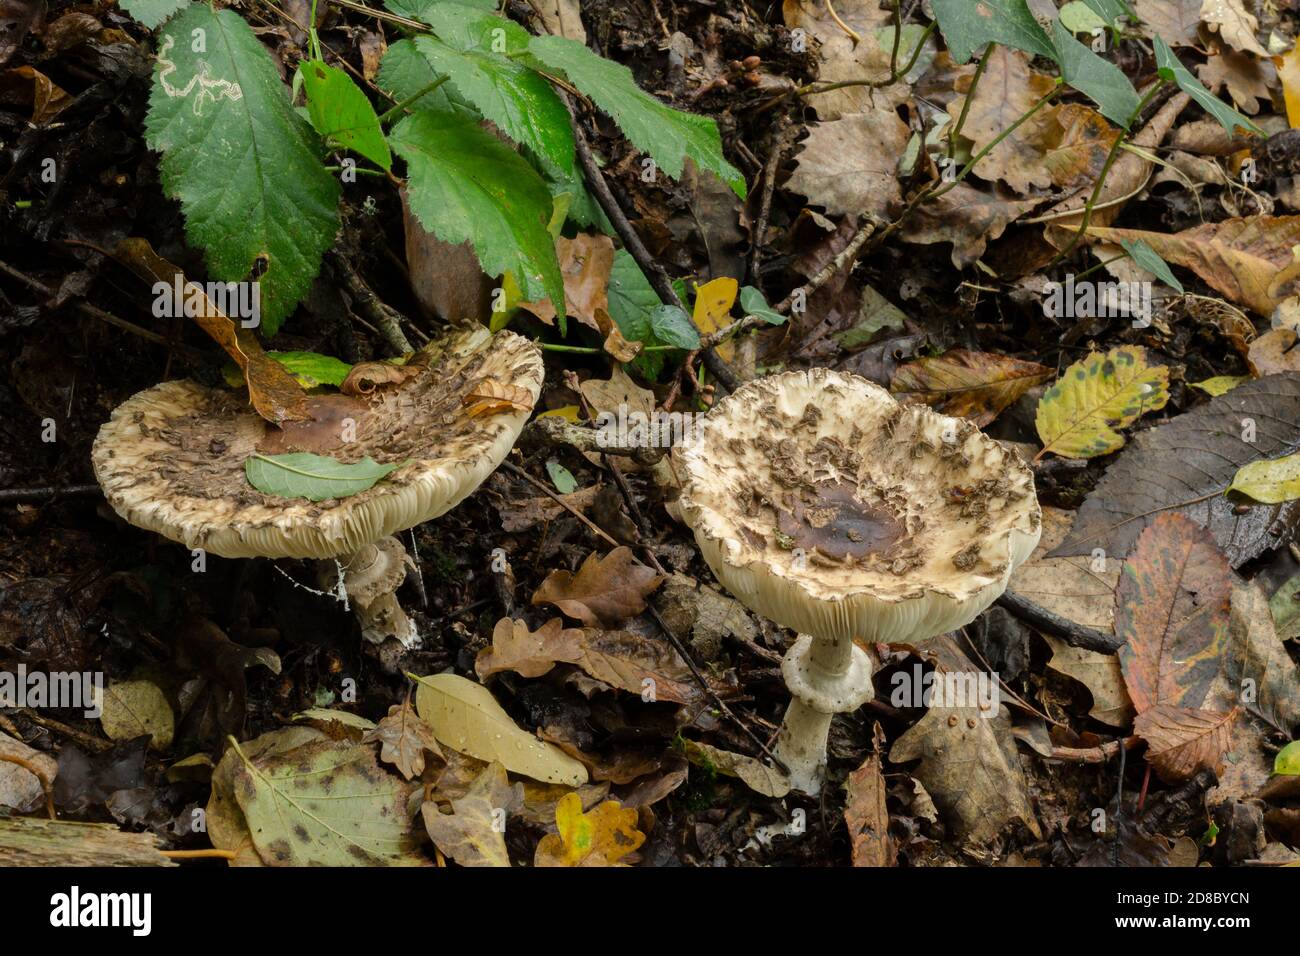 A pair of freckled dapperling mushrooms or echinoderma asperum growing in damp leaf litter. Stock Photo